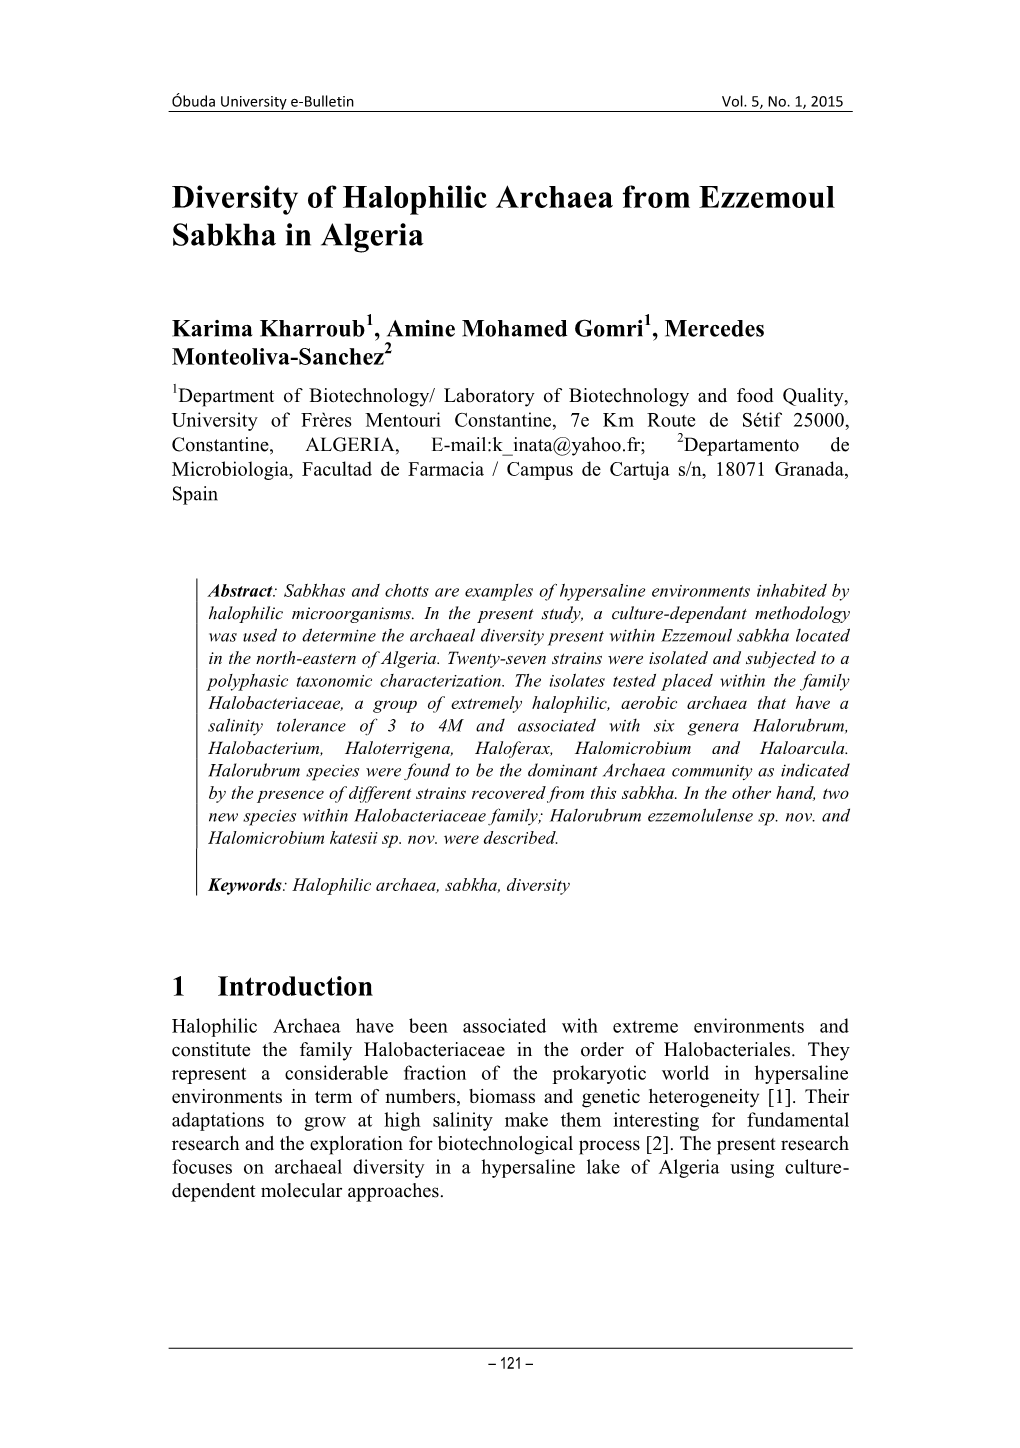 Diversity of Halophilic Archaea from Ezzemoul Sabkha in Algeria